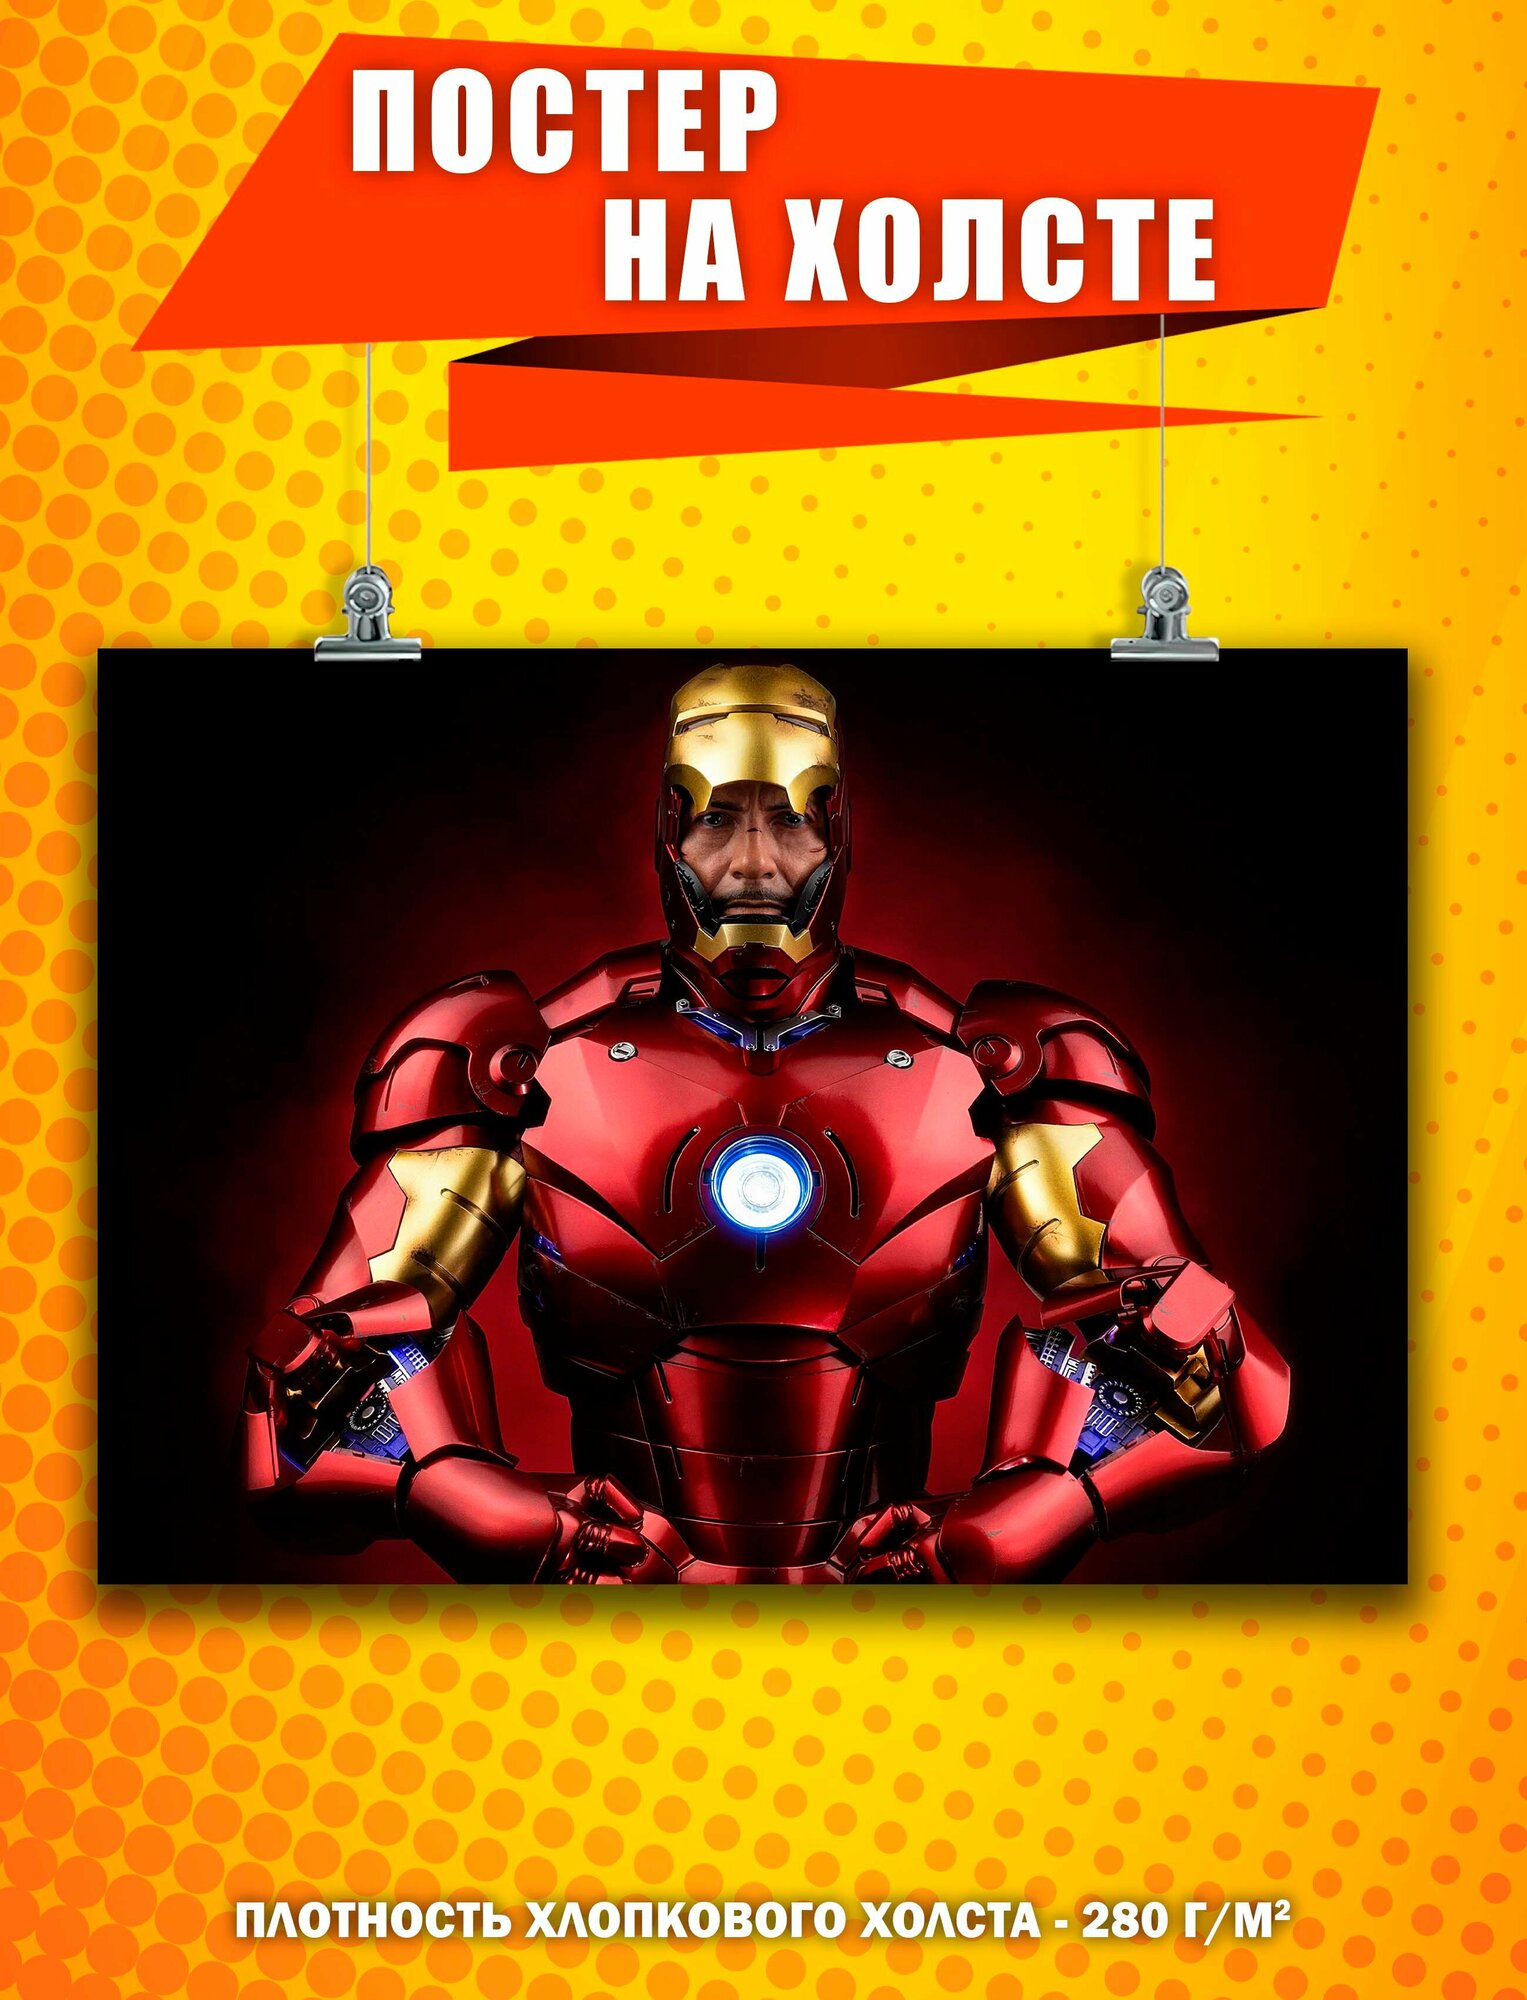 Постер на холсте Железный человек Марвел Тони Старк Iron man 9 40х60 см